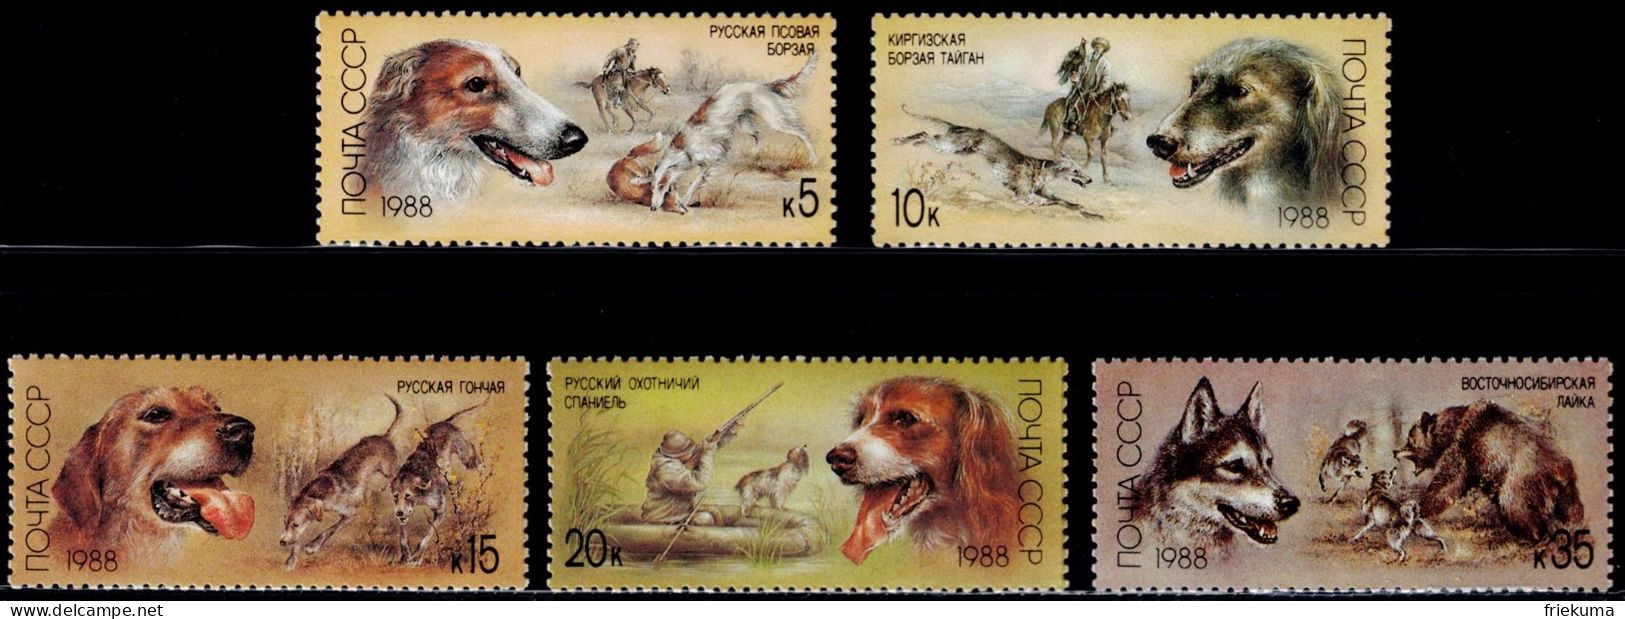 CCCP 1988, Dogs: Barsoi, Taigan, Russian Hunting Dog, Russian Spaniel, East Siberian Polar Dog (Laika), MiNr. 5827-5831 - Hunde